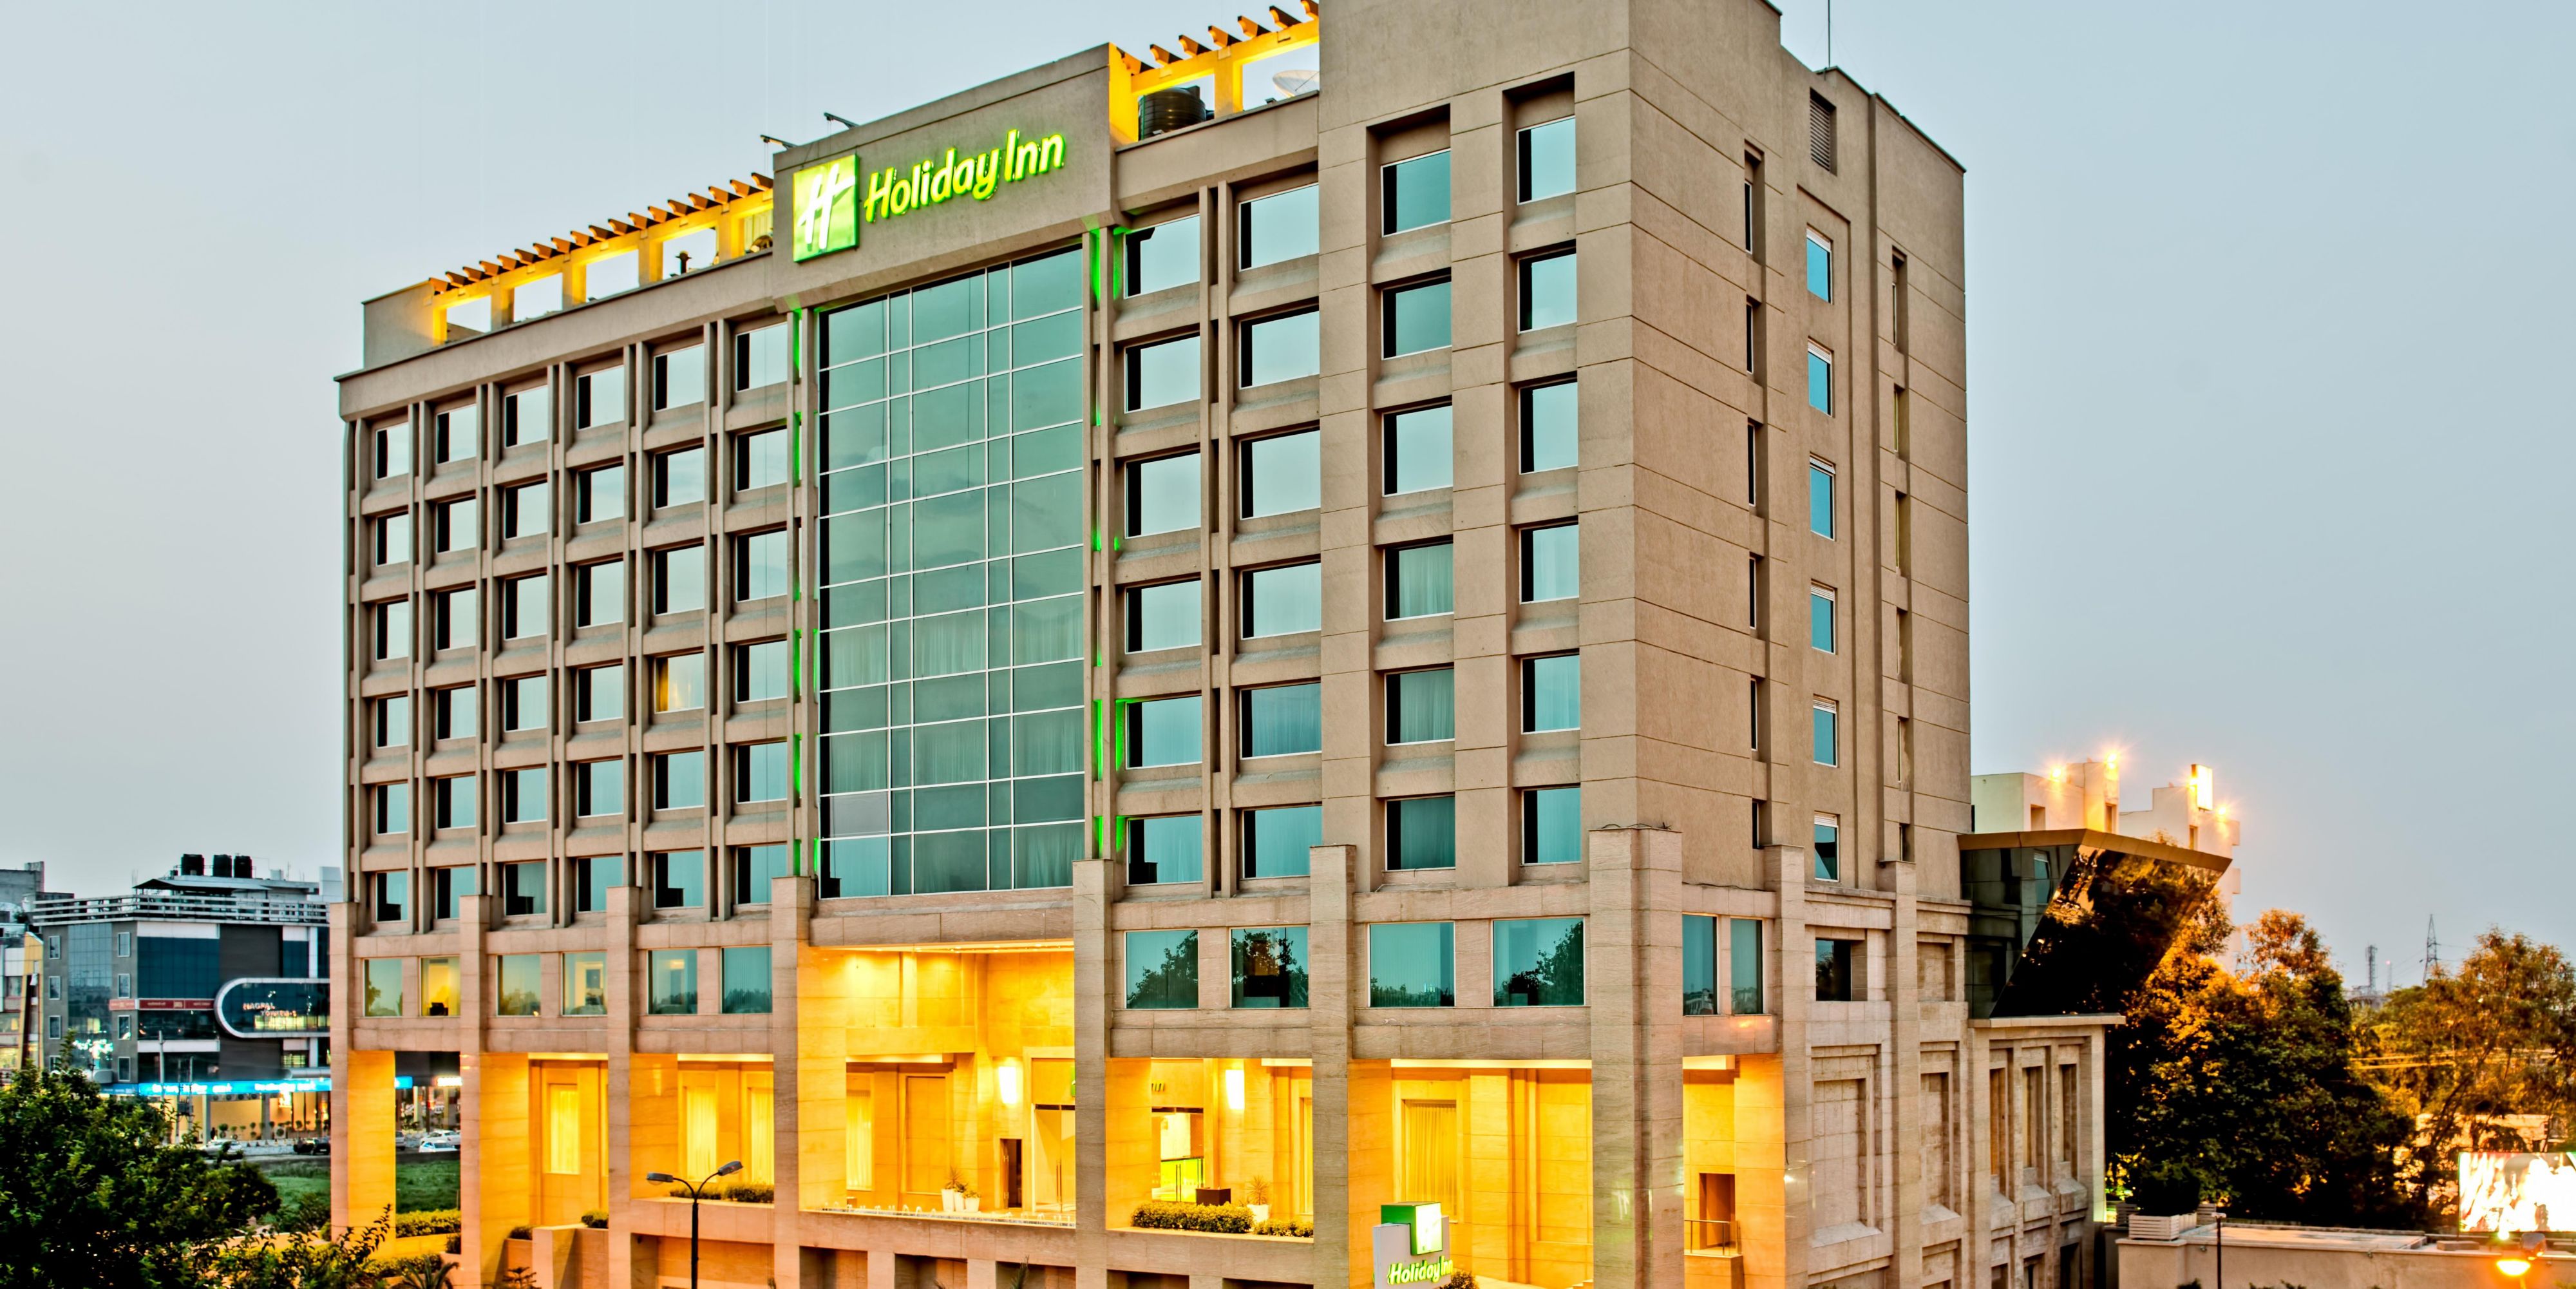 Hk Clarks Inn Hotel Amritsar Reviews Photos Offers